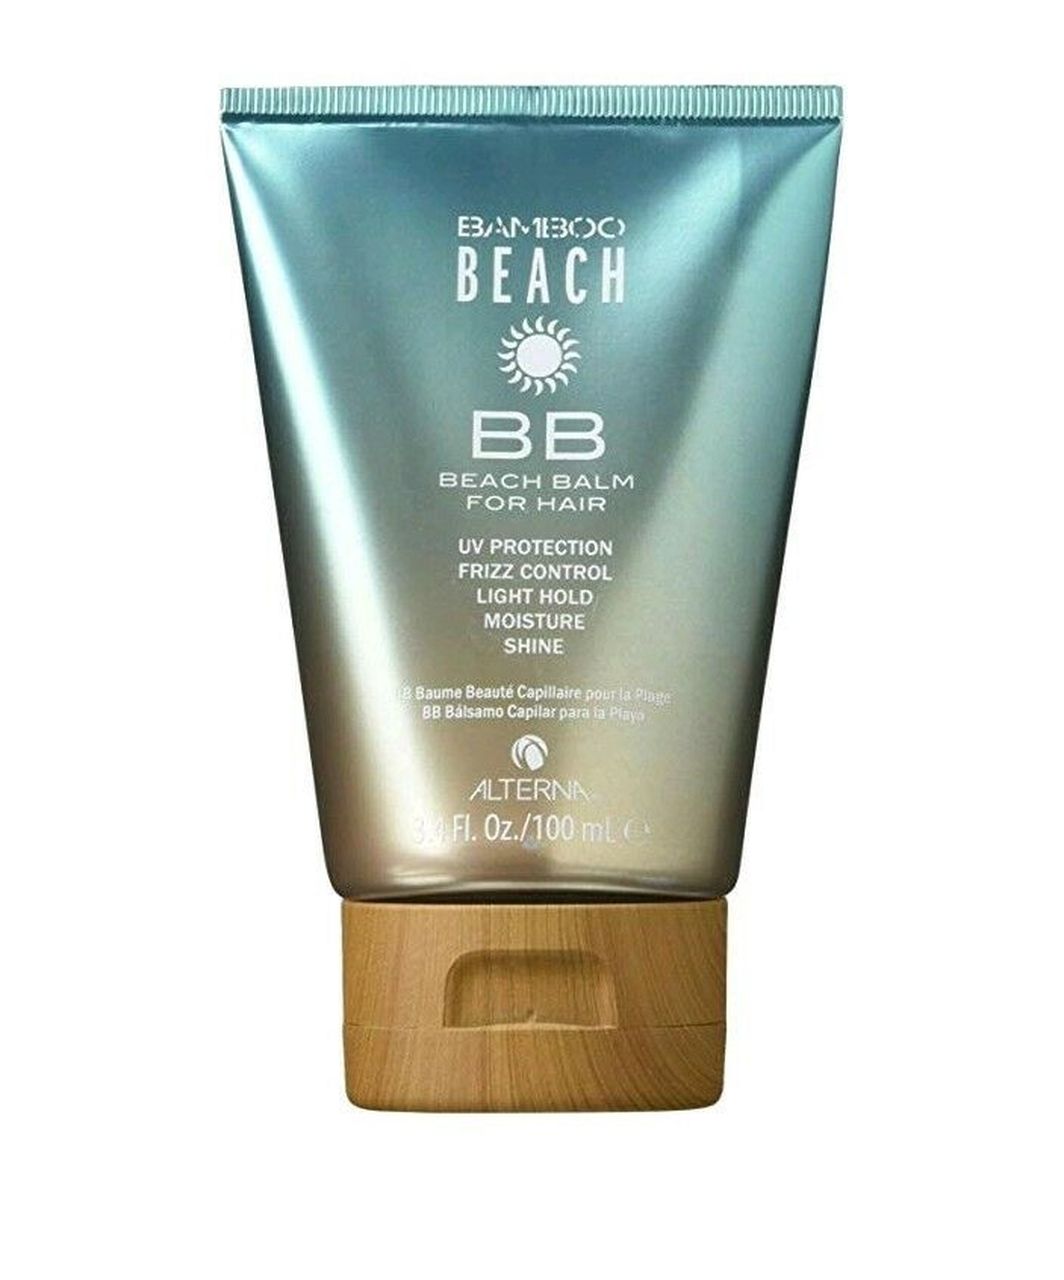 Alterna Alterna Bamboo Beach Beach Balm For Hair 3 4 Oz Walmart Com Walmart Com